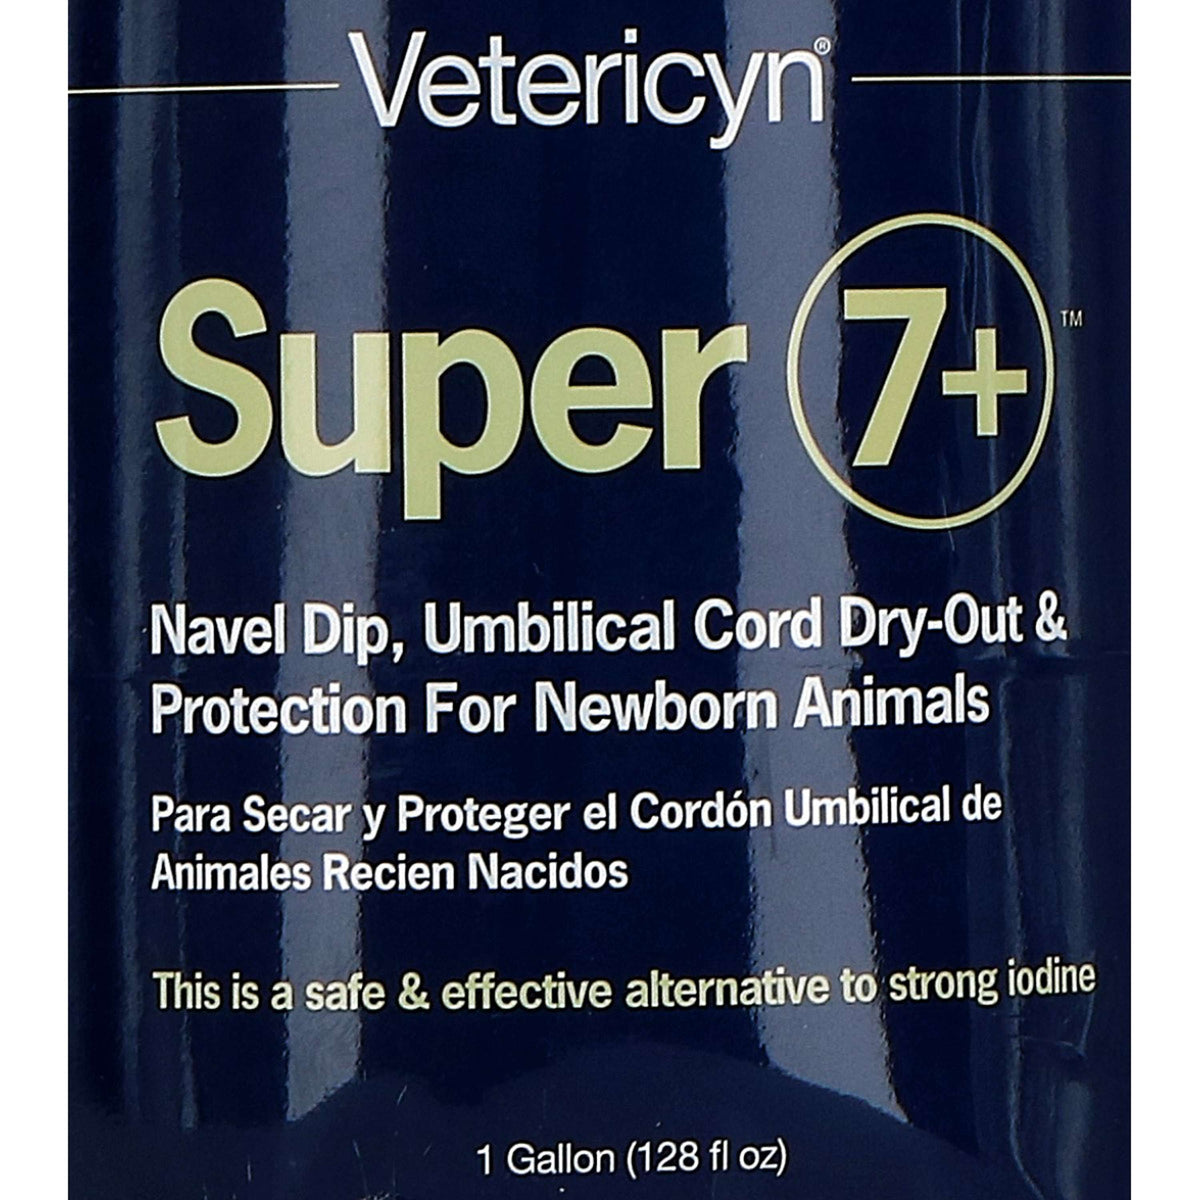 Vetericyn Super 7+ Nabel